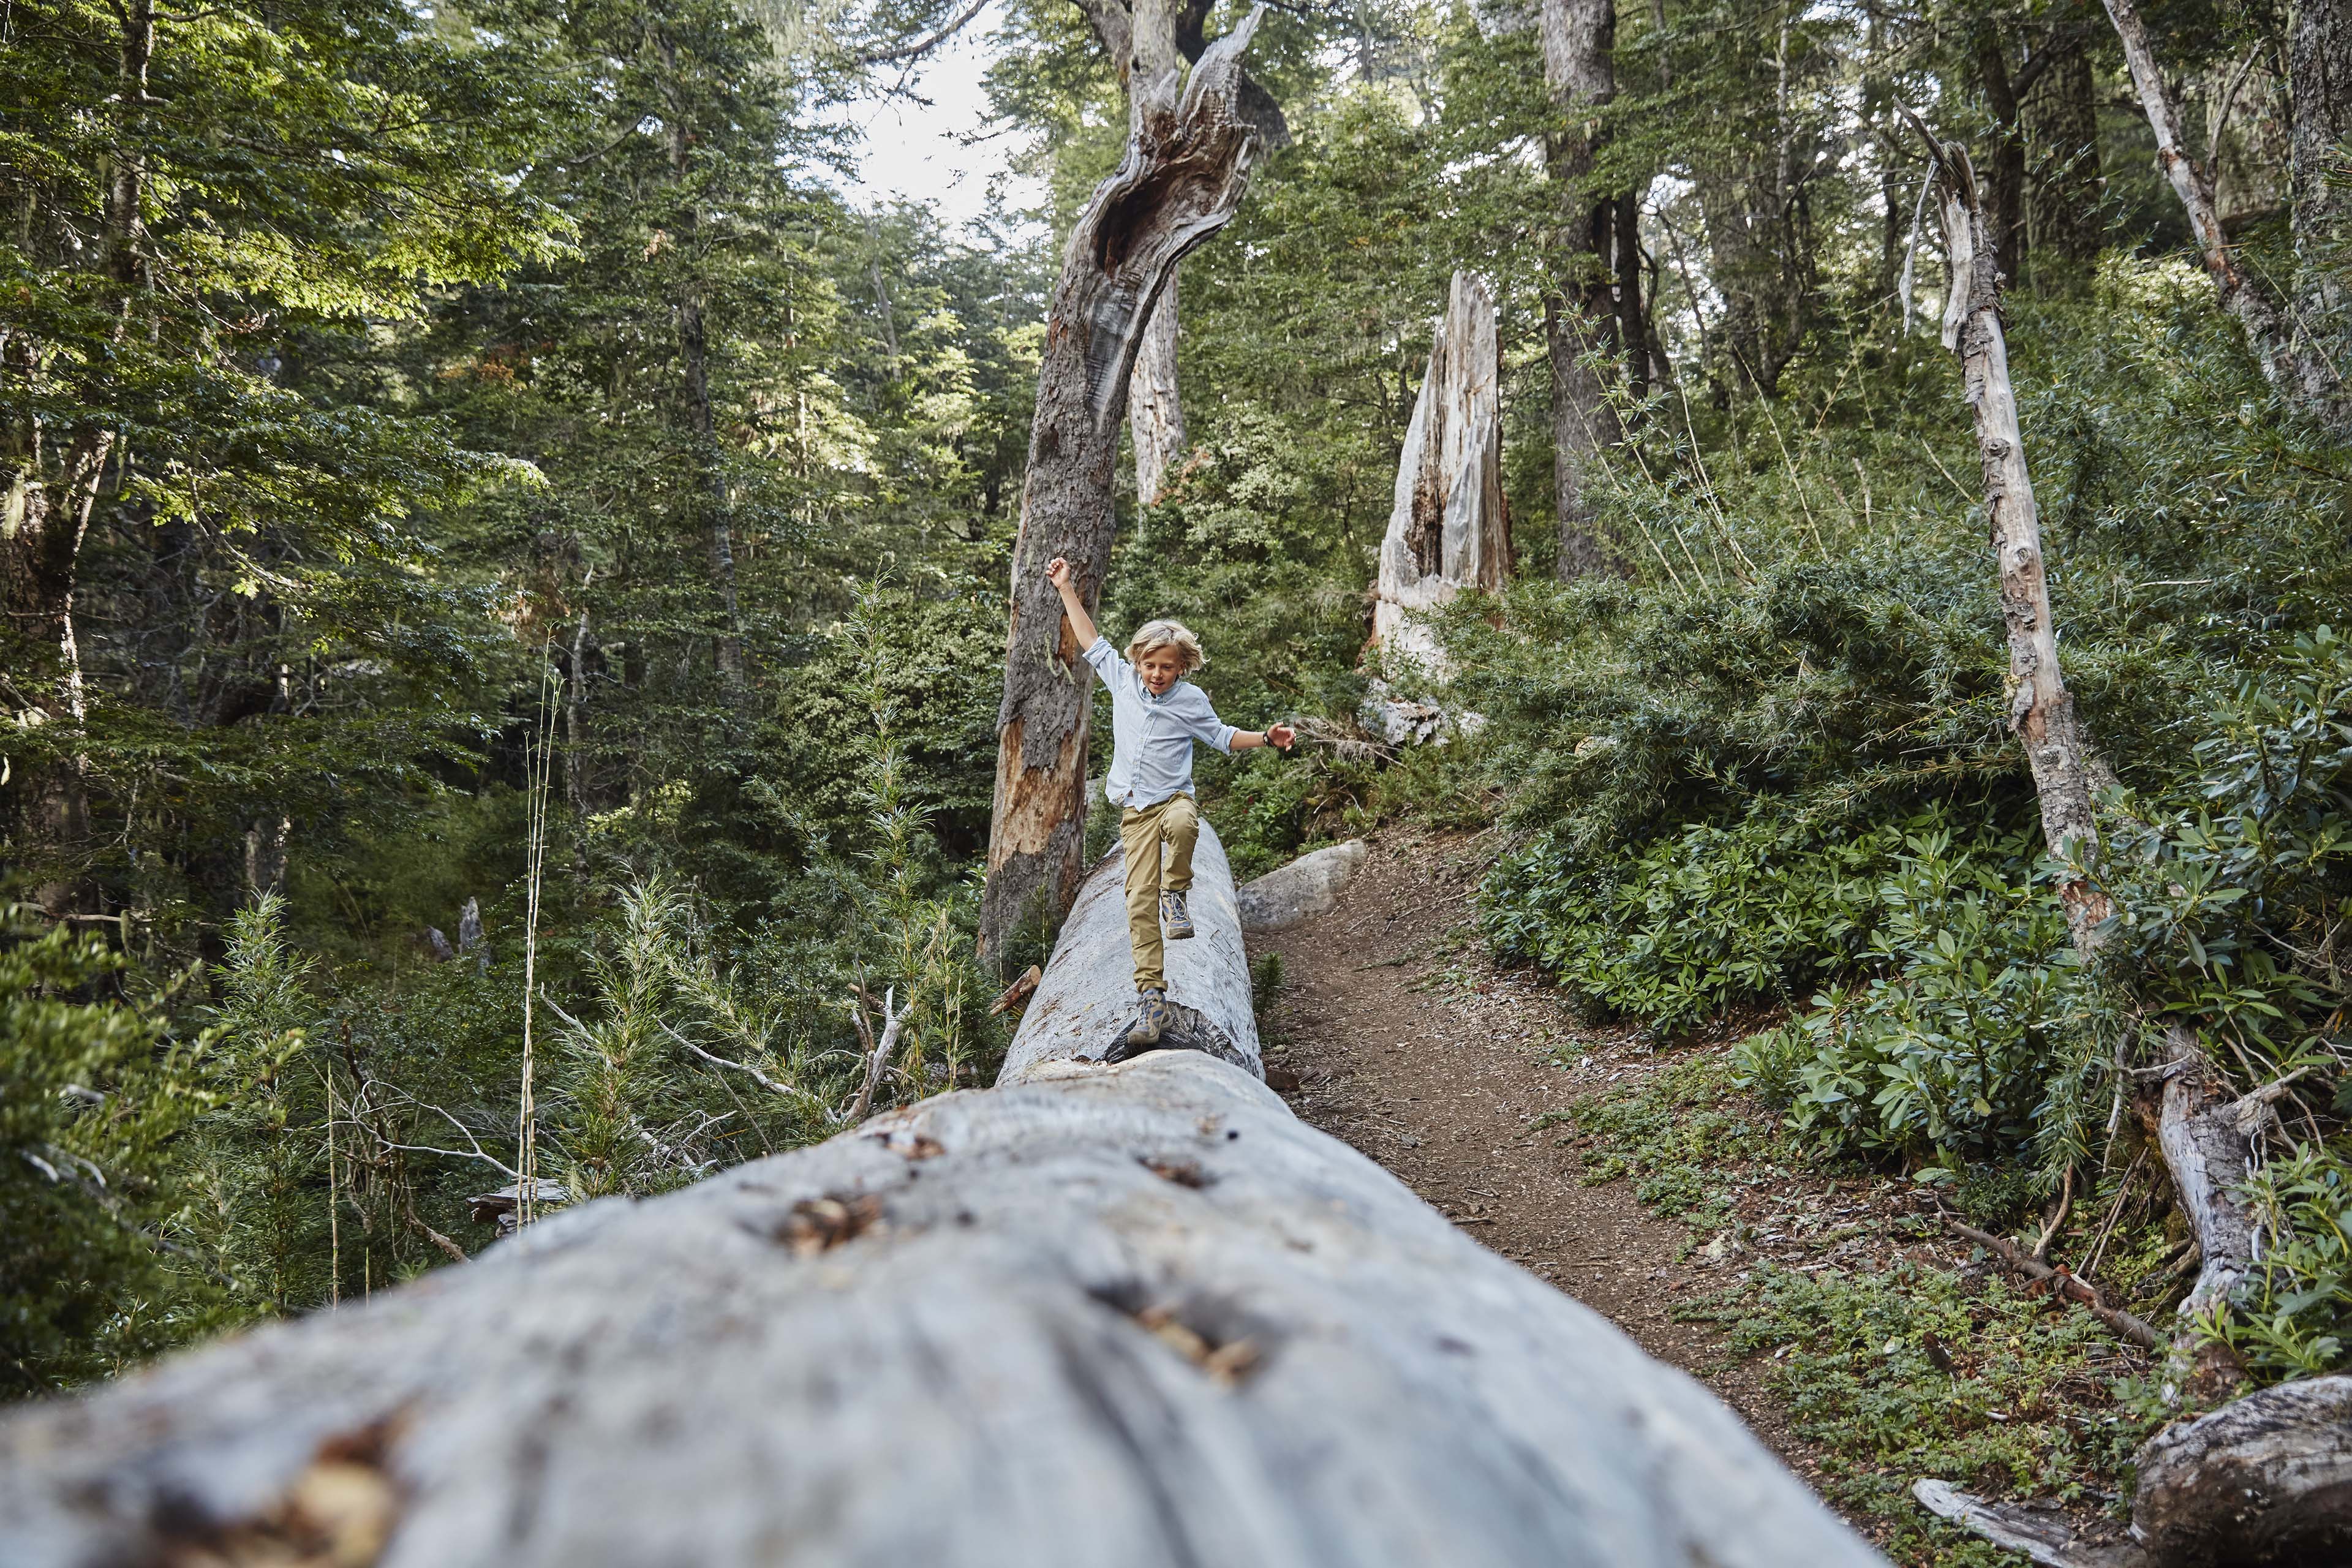 Boy balancing on a fallen tree trunk in a forest